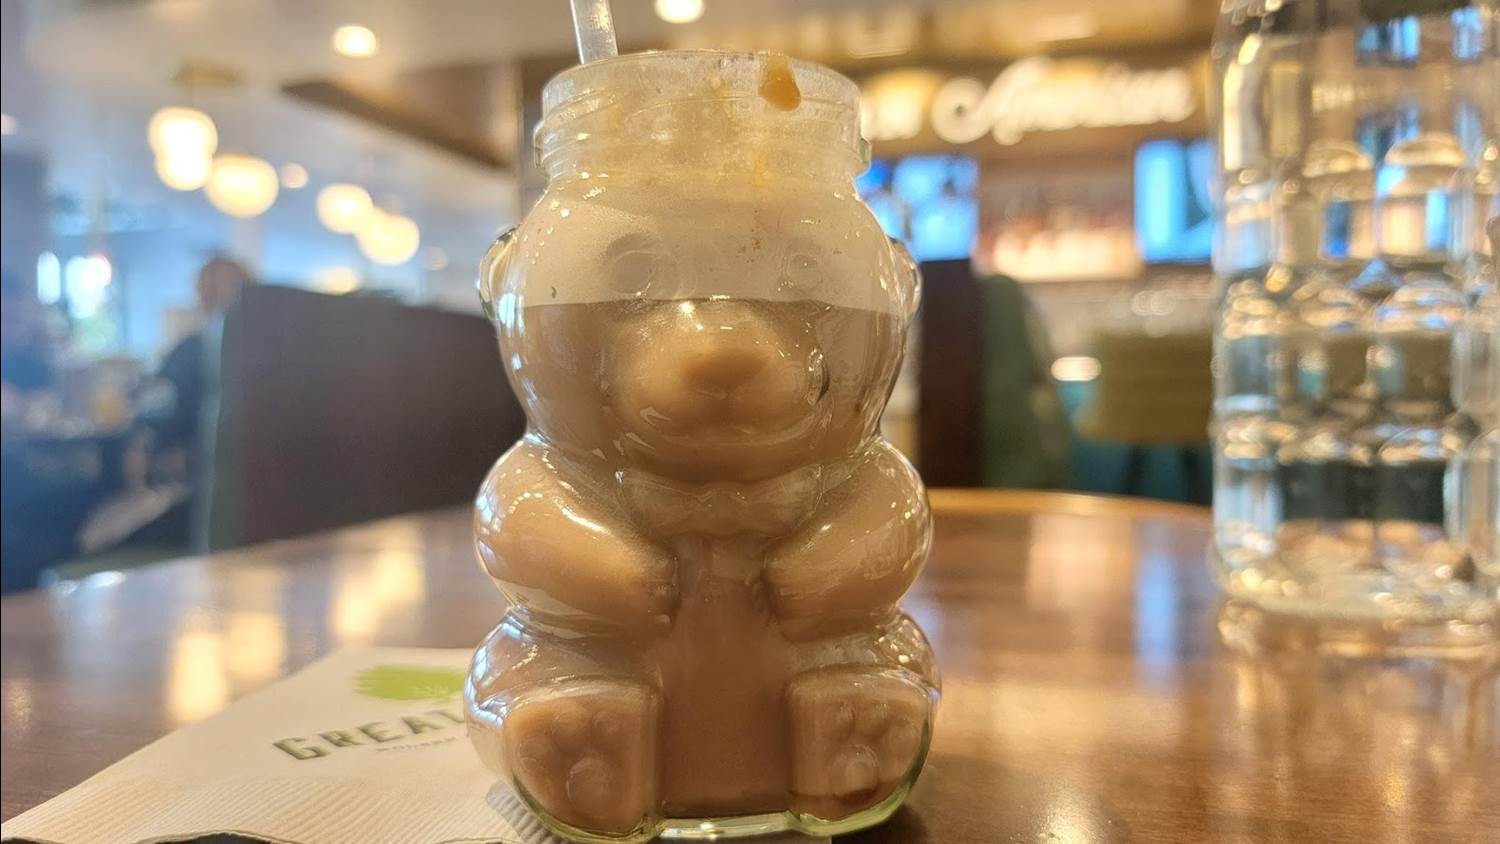 Great Maple Restaurant Espresso drinks served in adorable glass bear mug